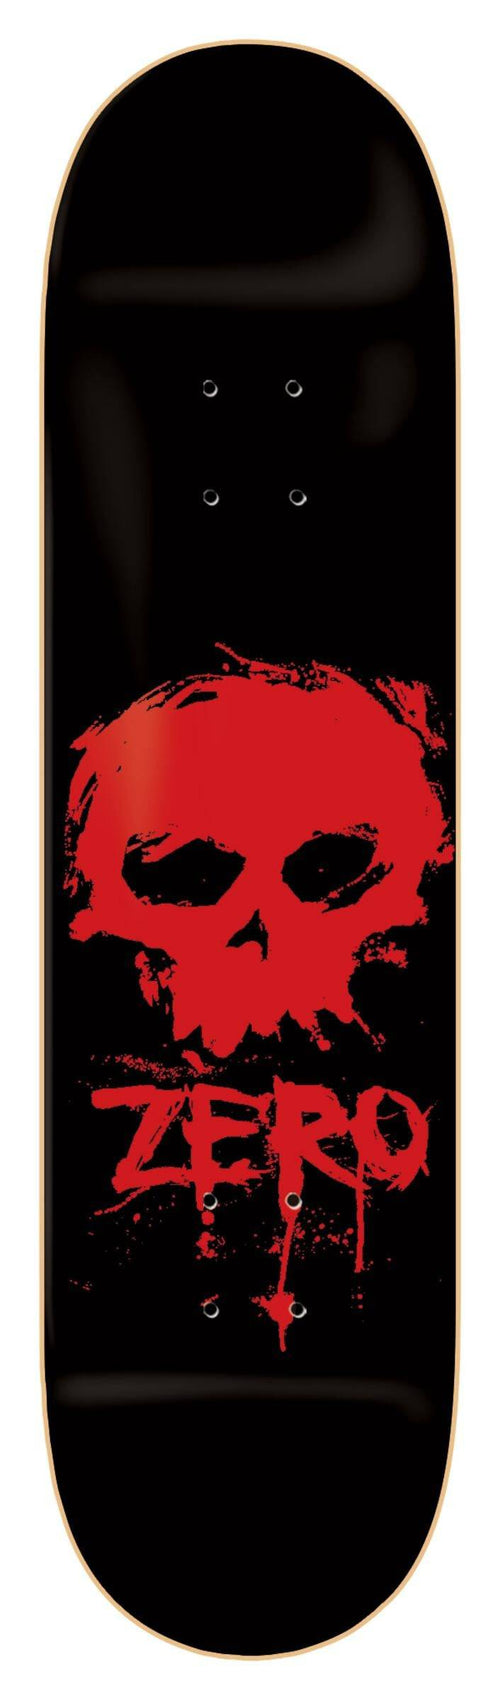 Zero Blood Skull Skateboard Deck - M I L O S P O R T